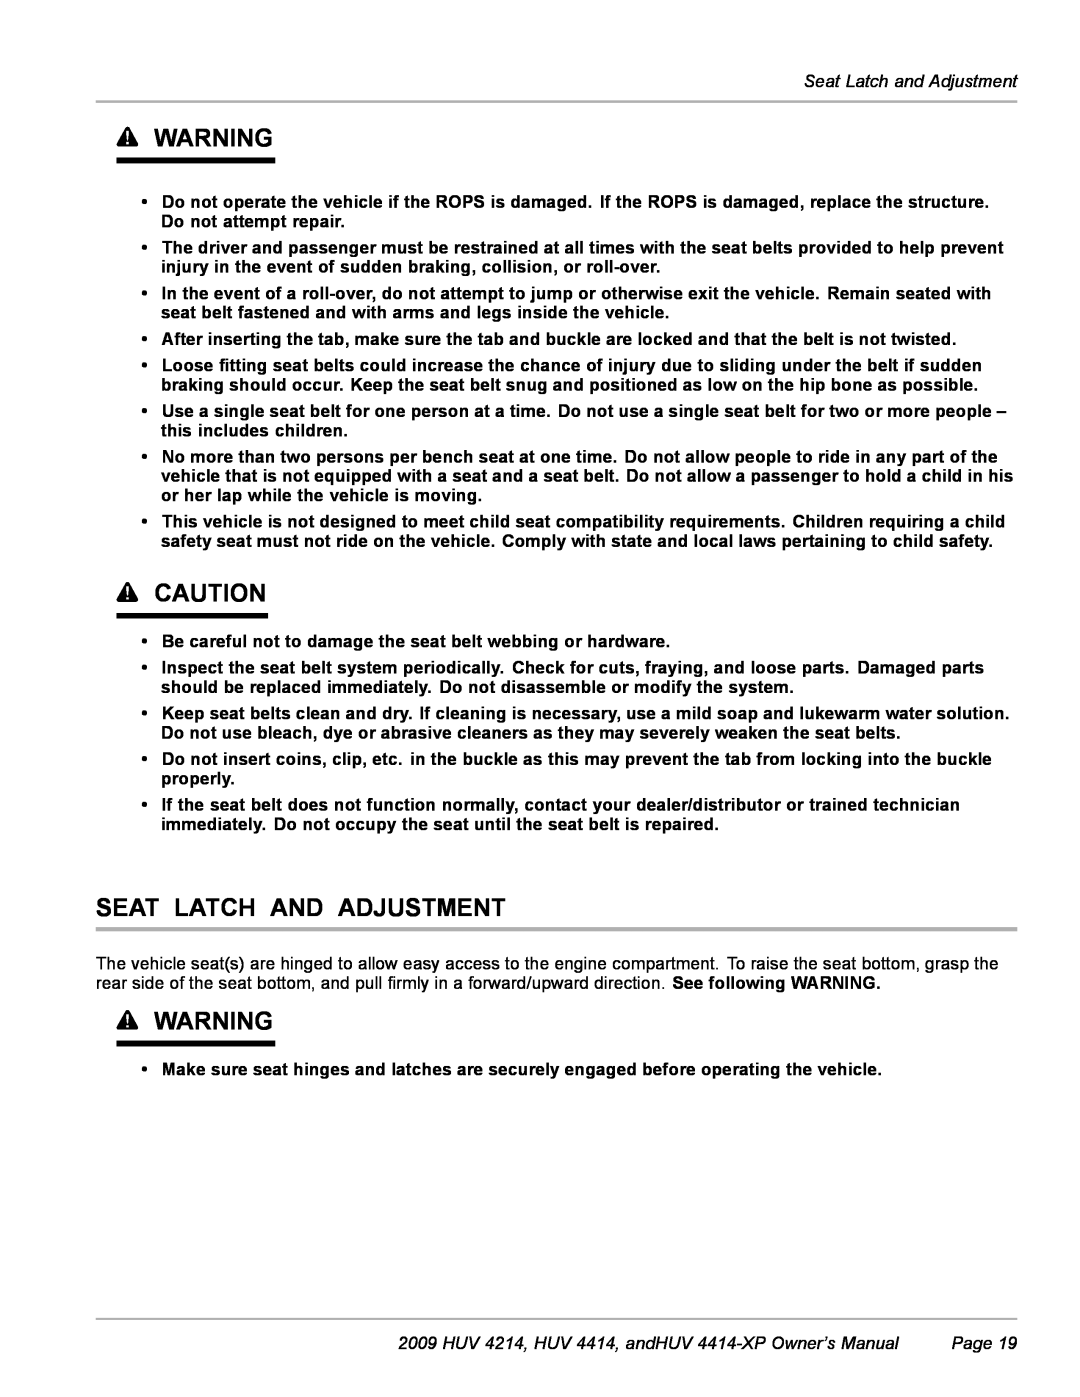 Husqvarna Seat Latch And Adjustment, Seat Latch and Adjustment, HUV 4214, HUV 4414, andHUV 4414-XP Owner’s Manual, Page 